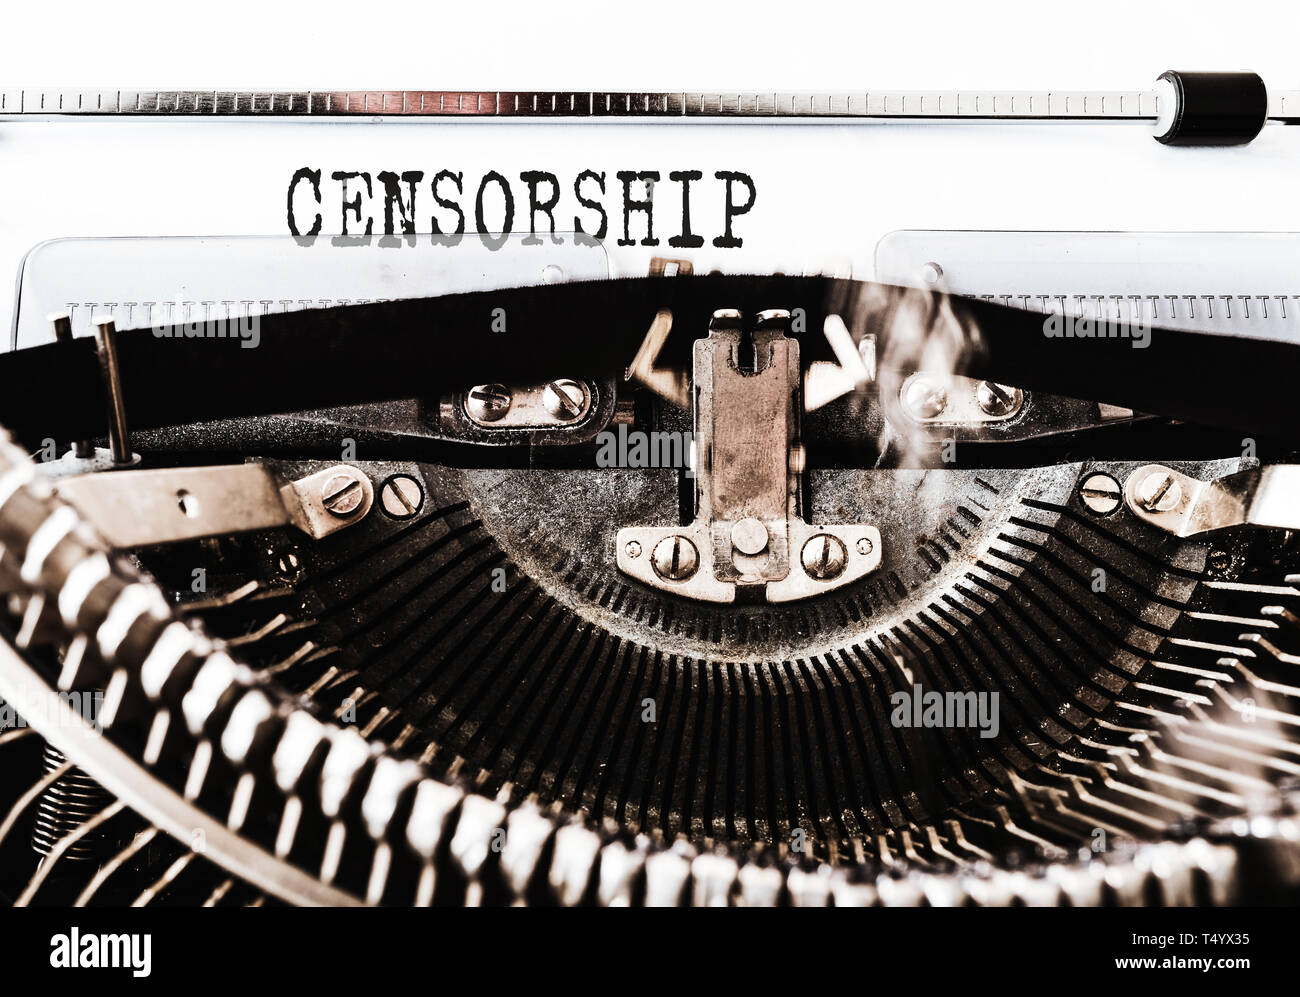 close-up of word CENSORSHIP written on old manual typewriter Stock Photo